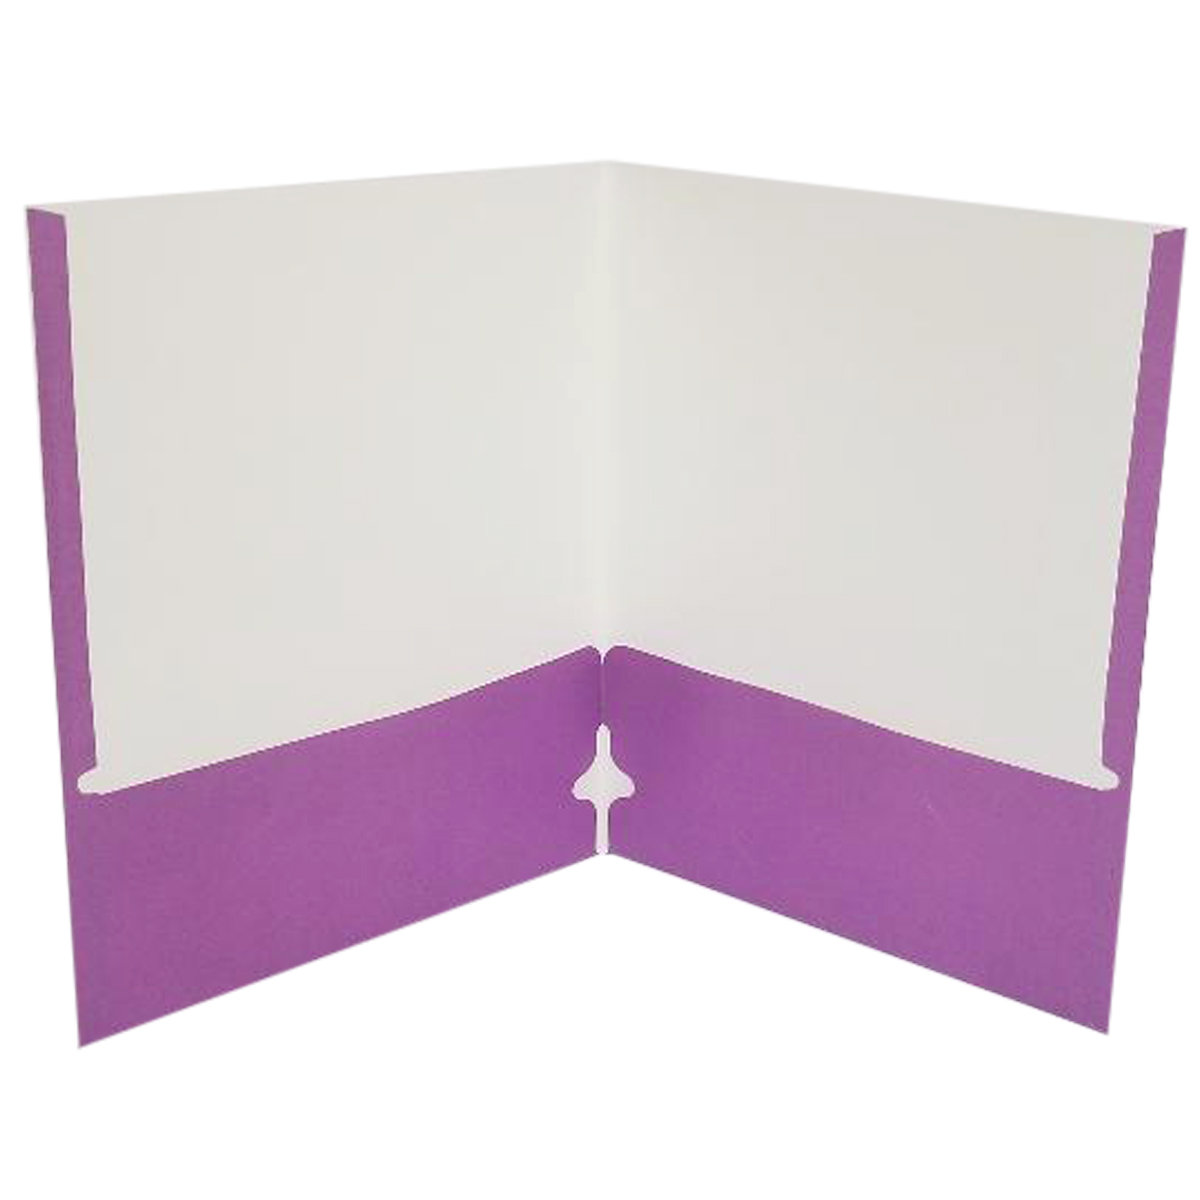 Purple 2-Pocket Folders w/ Display